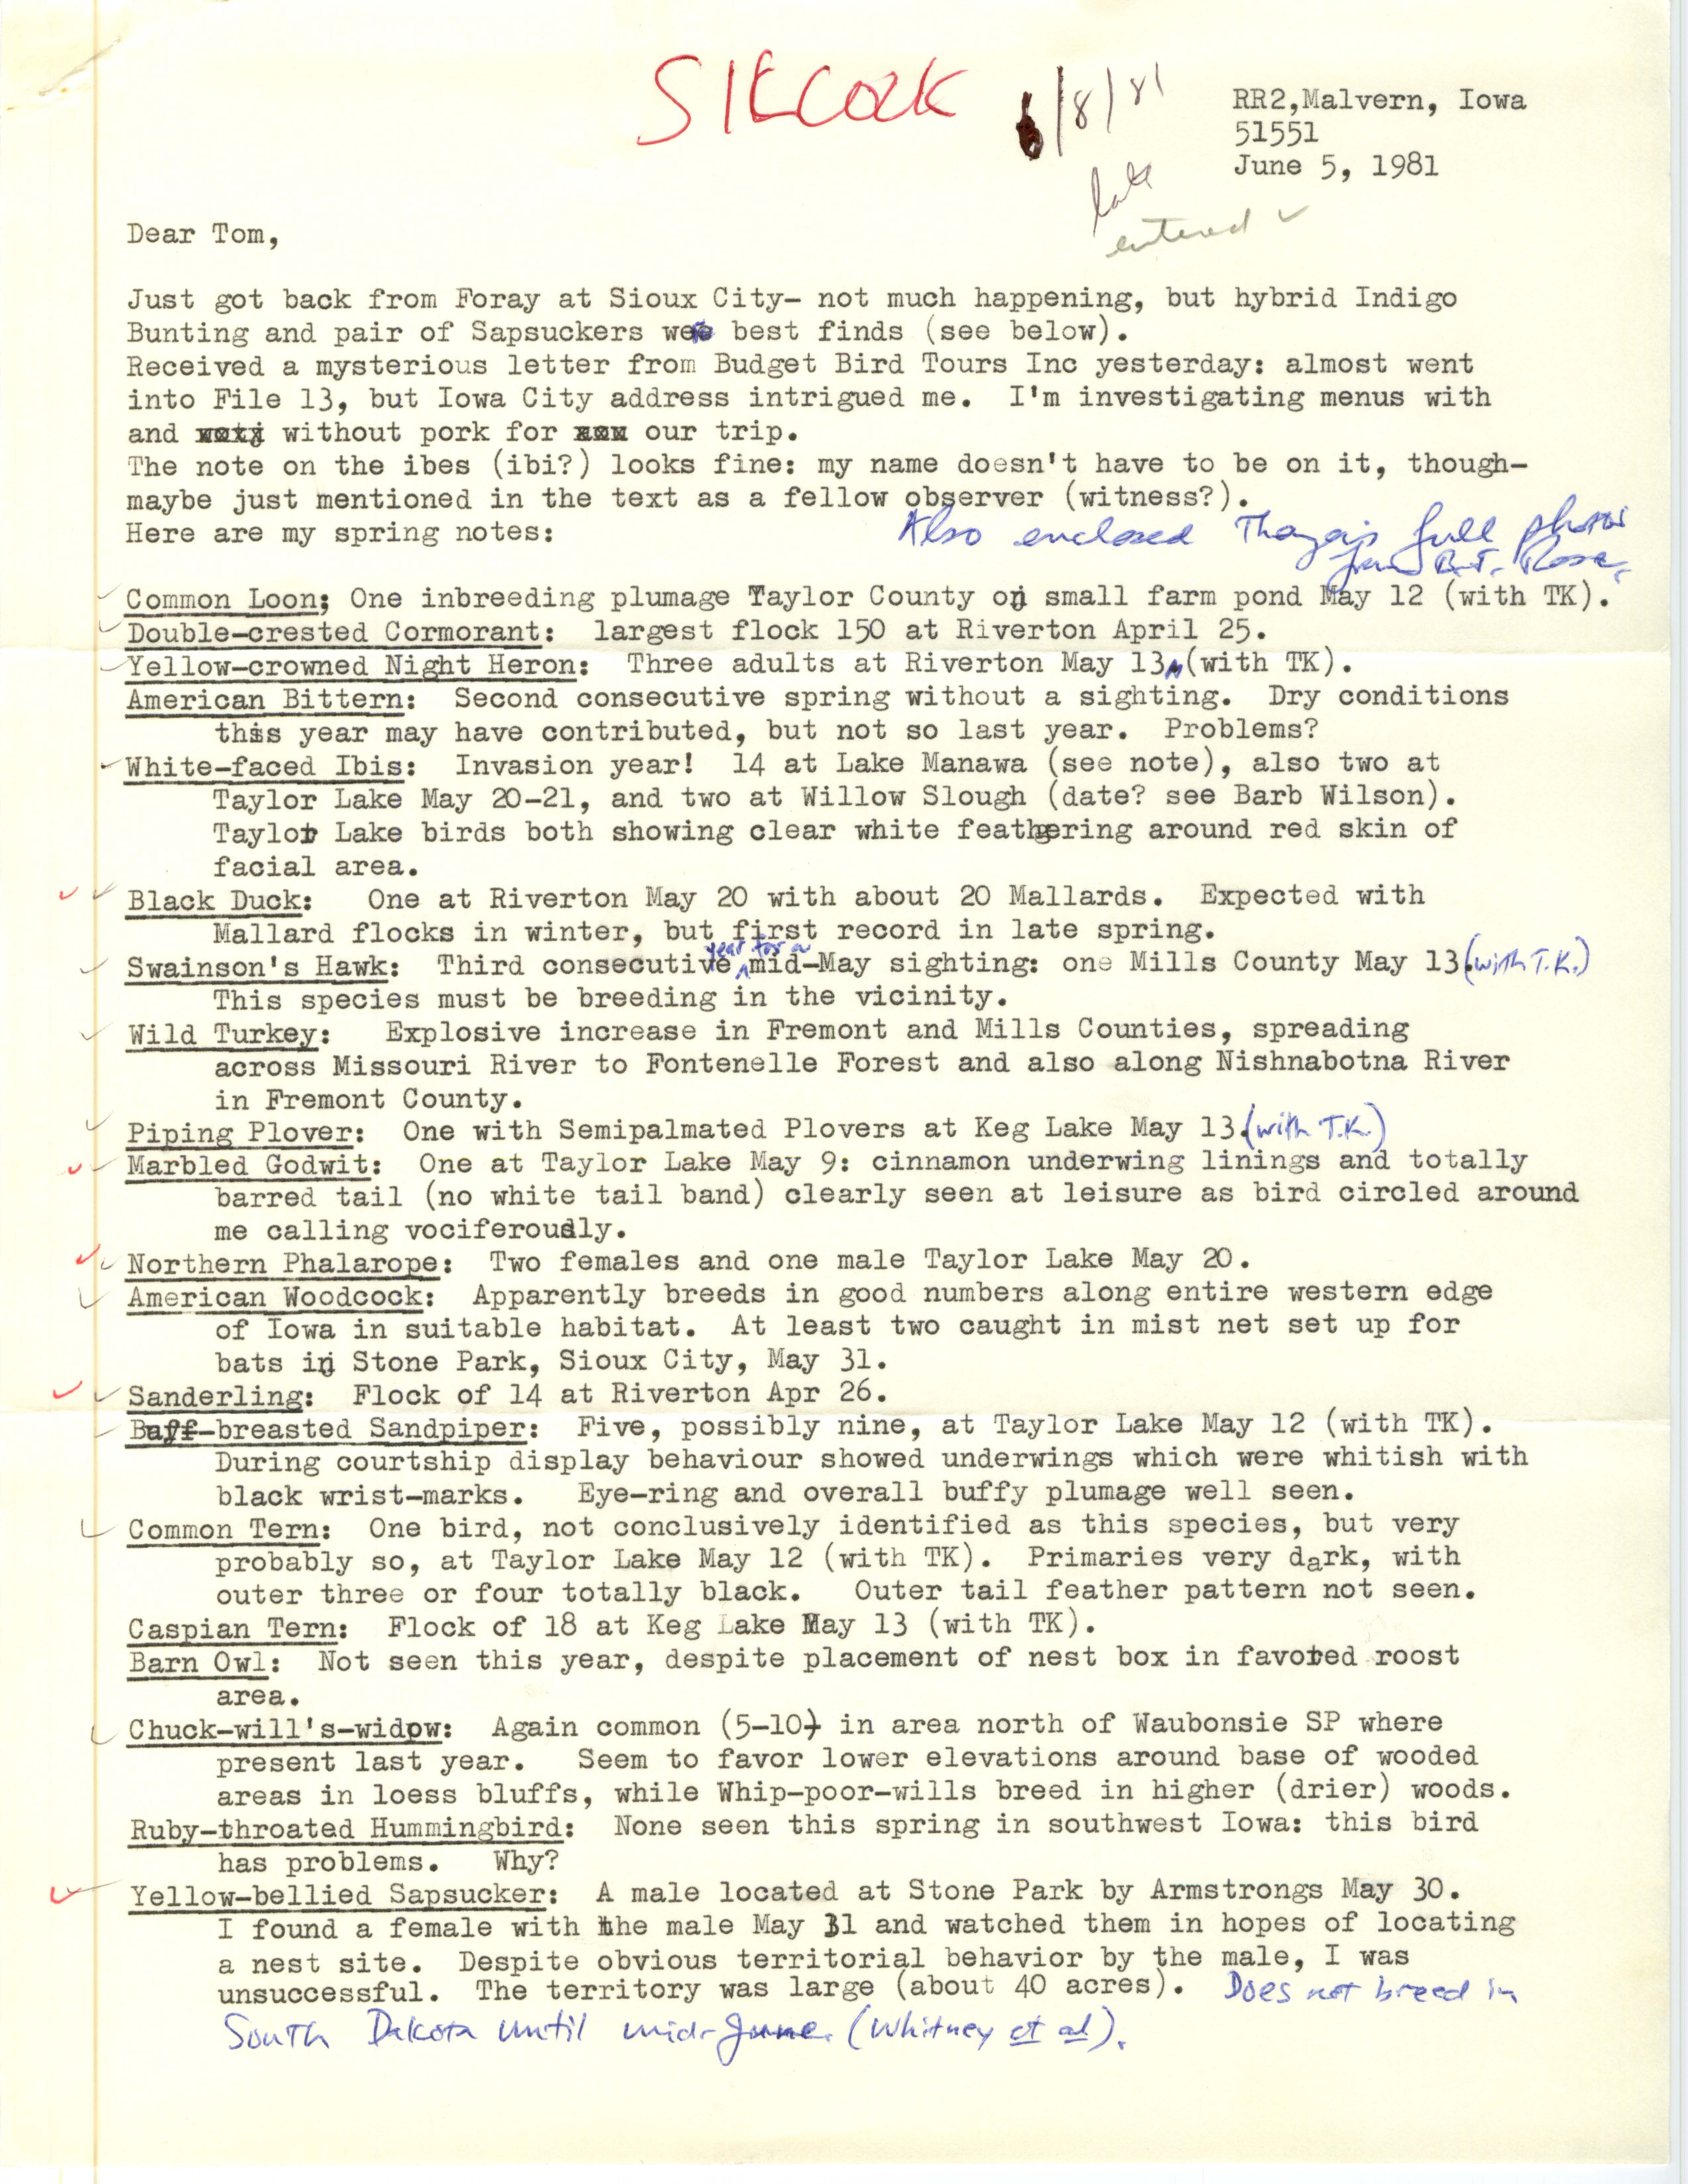 Ross Silcock letter to Thomas Kent regarding spring notes, June 5, 1981